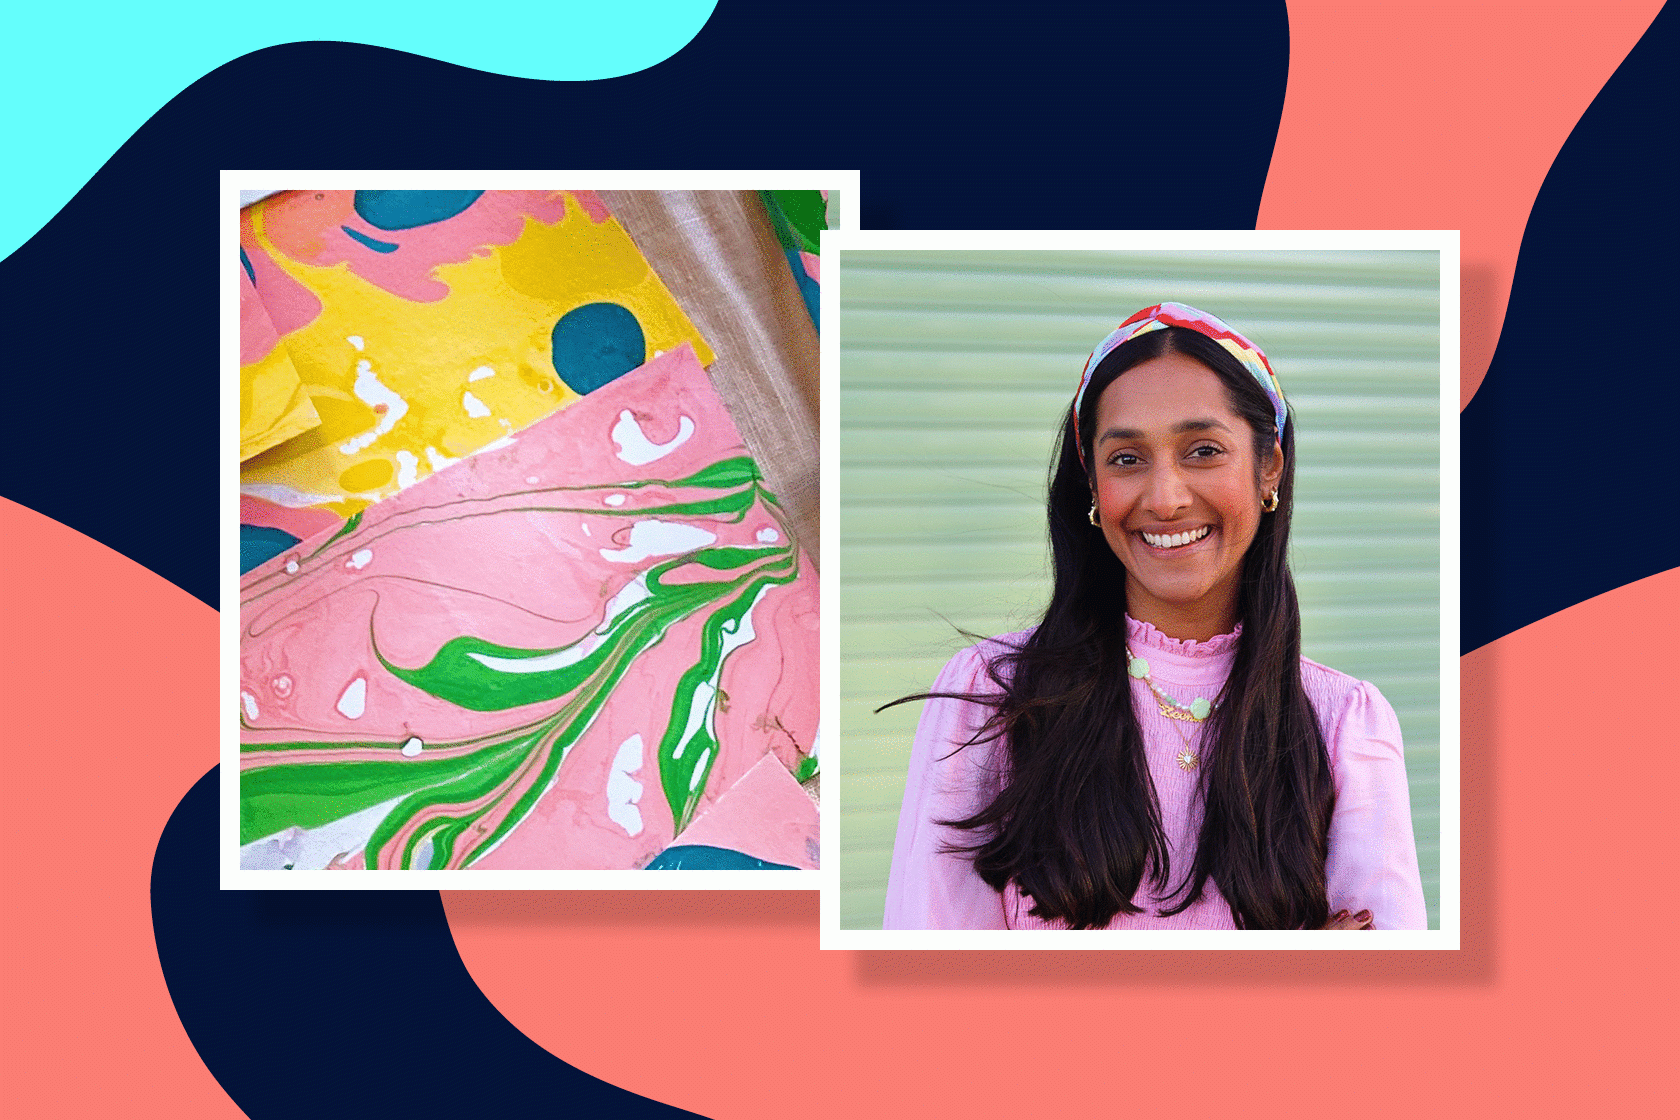 Influencer Zeena Shah in composite image next to DIY paper in marble design